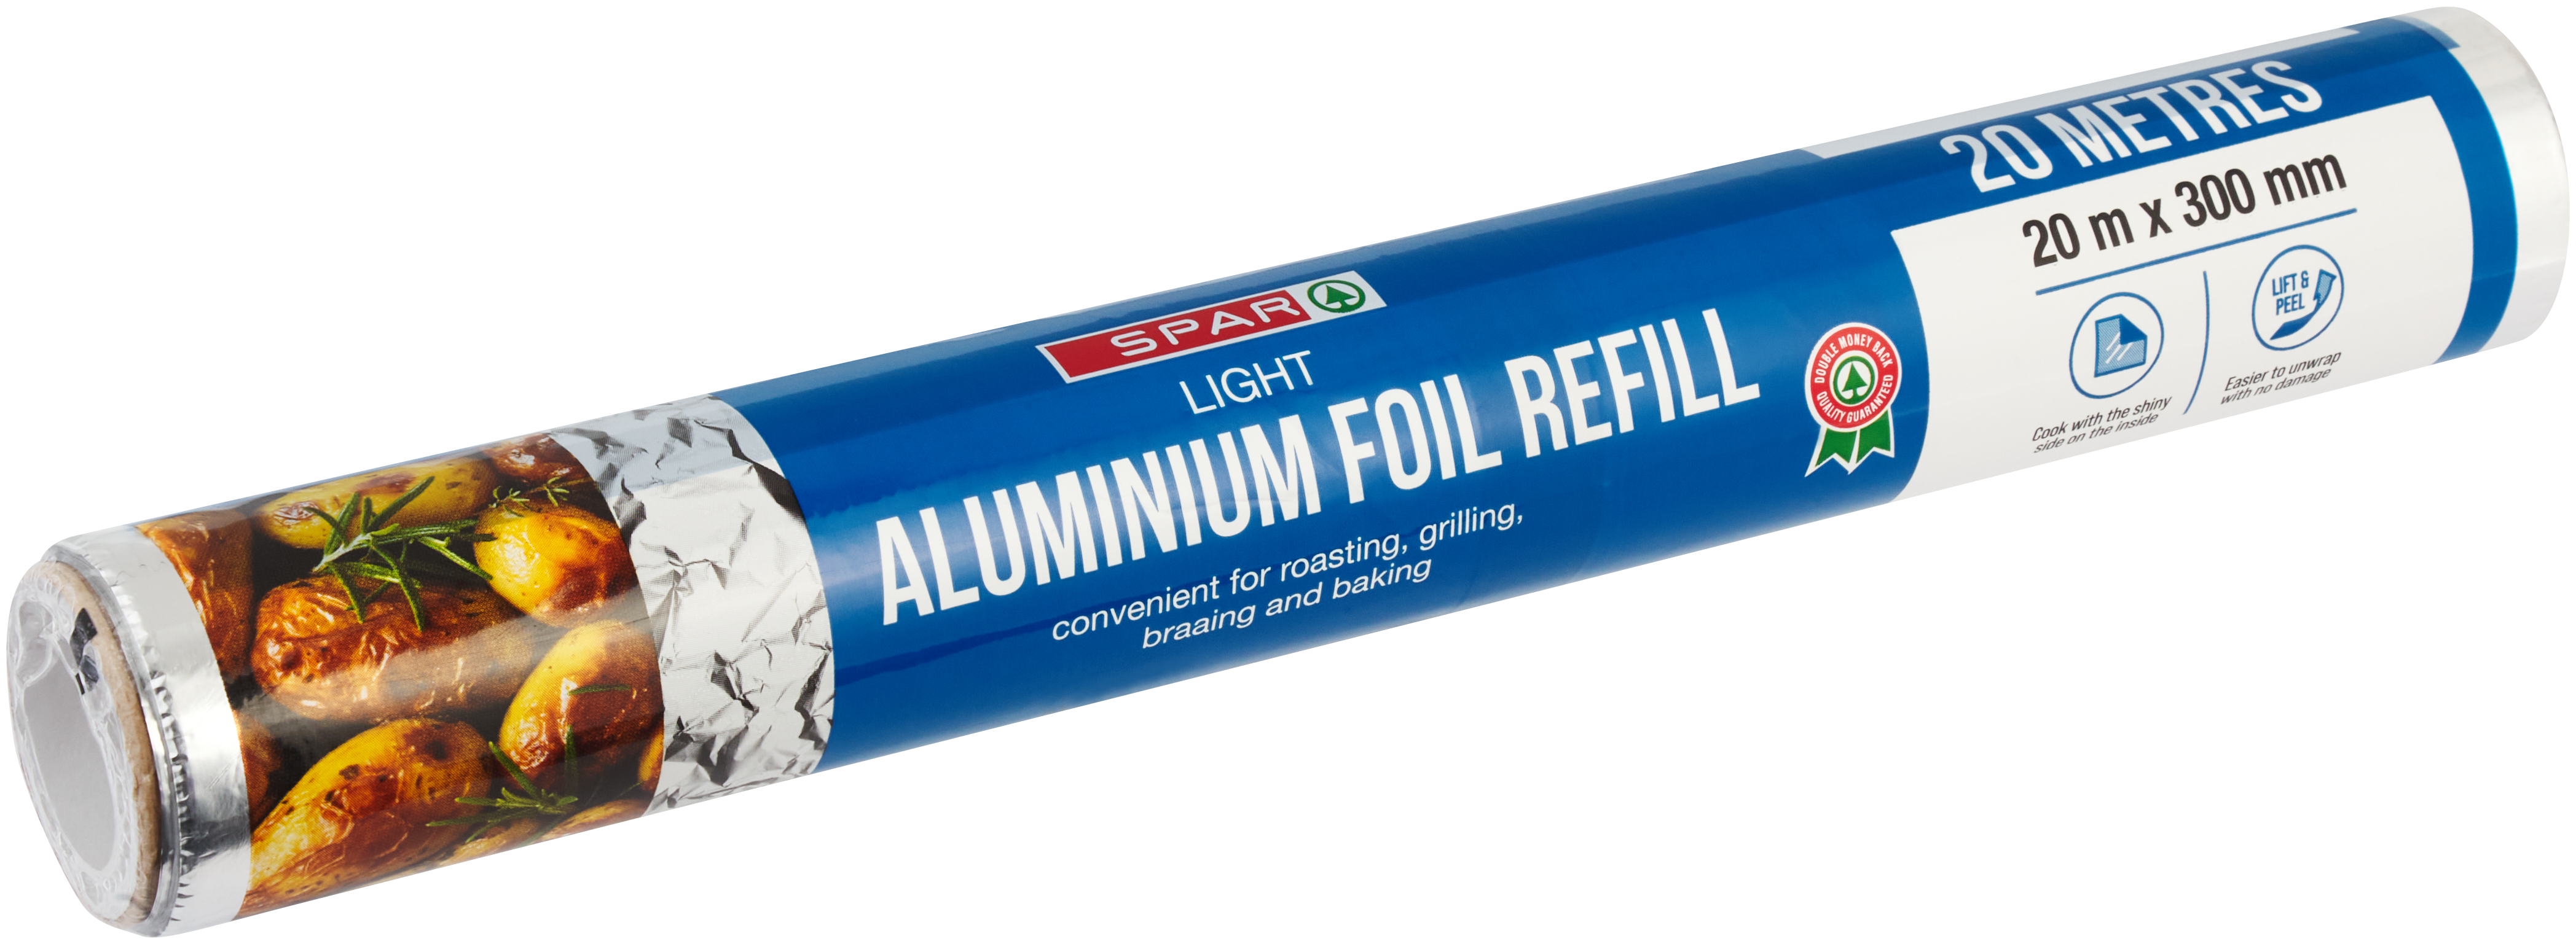 light aluminum foil refill